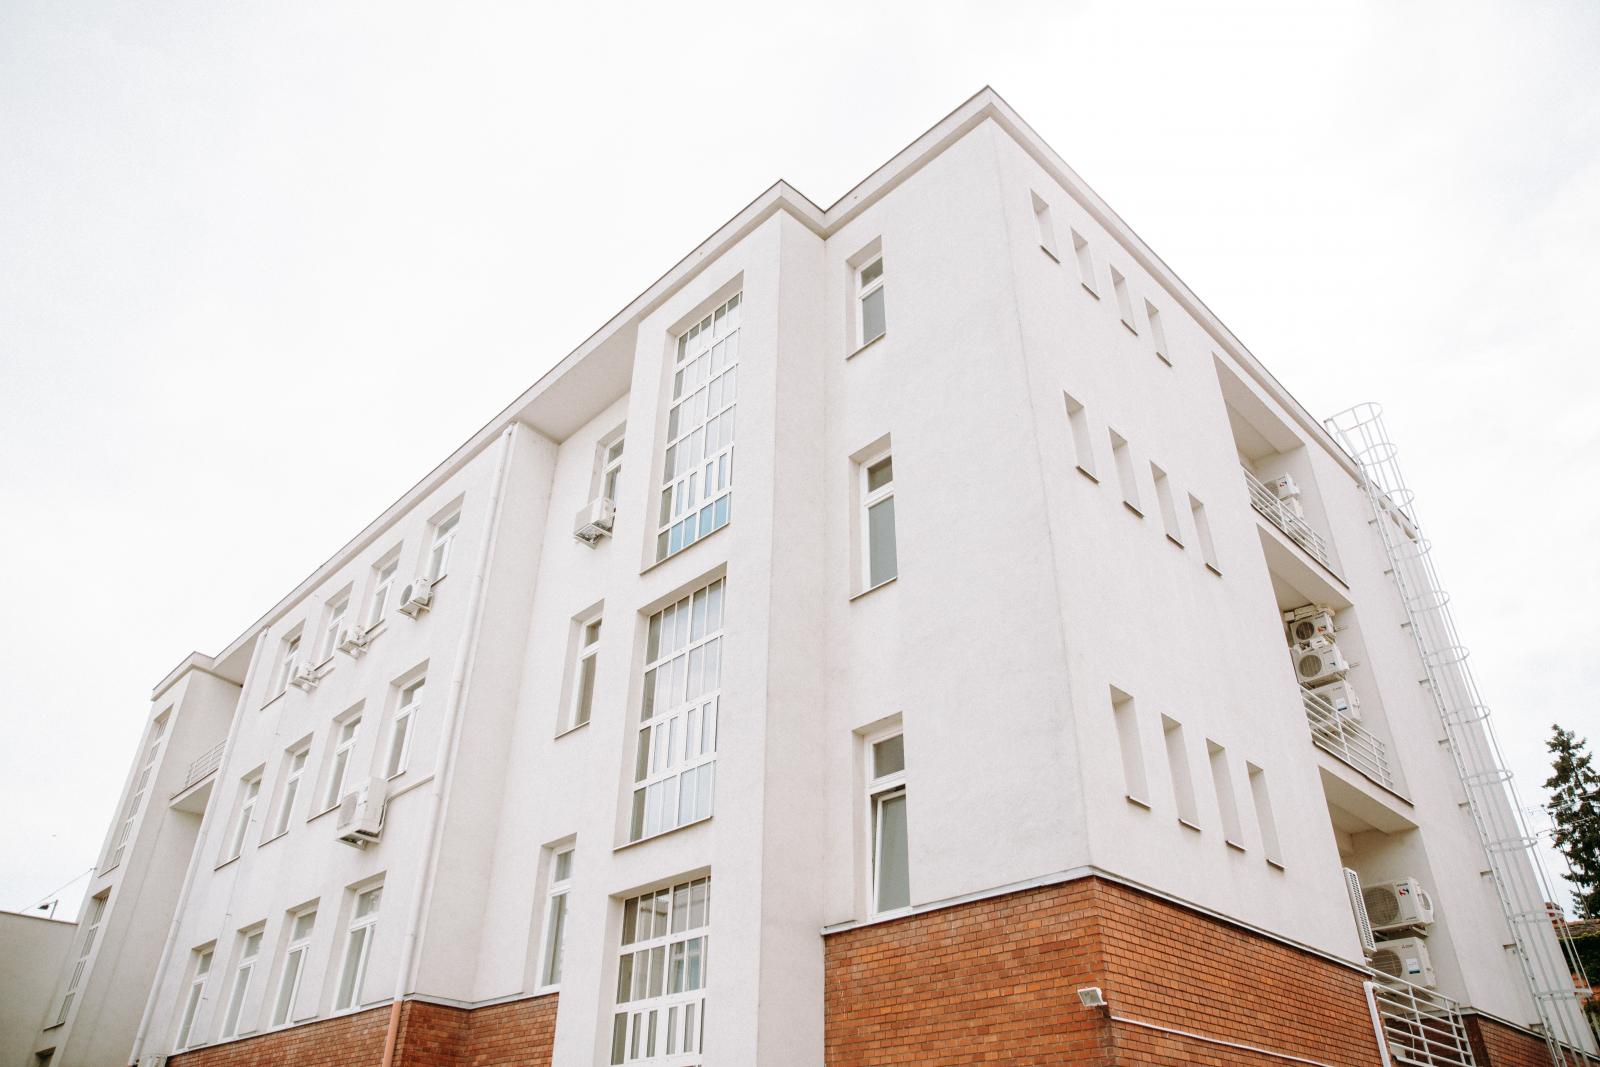 právnická fakulta trnavskej univerzity v trnave, foto barbora likavská